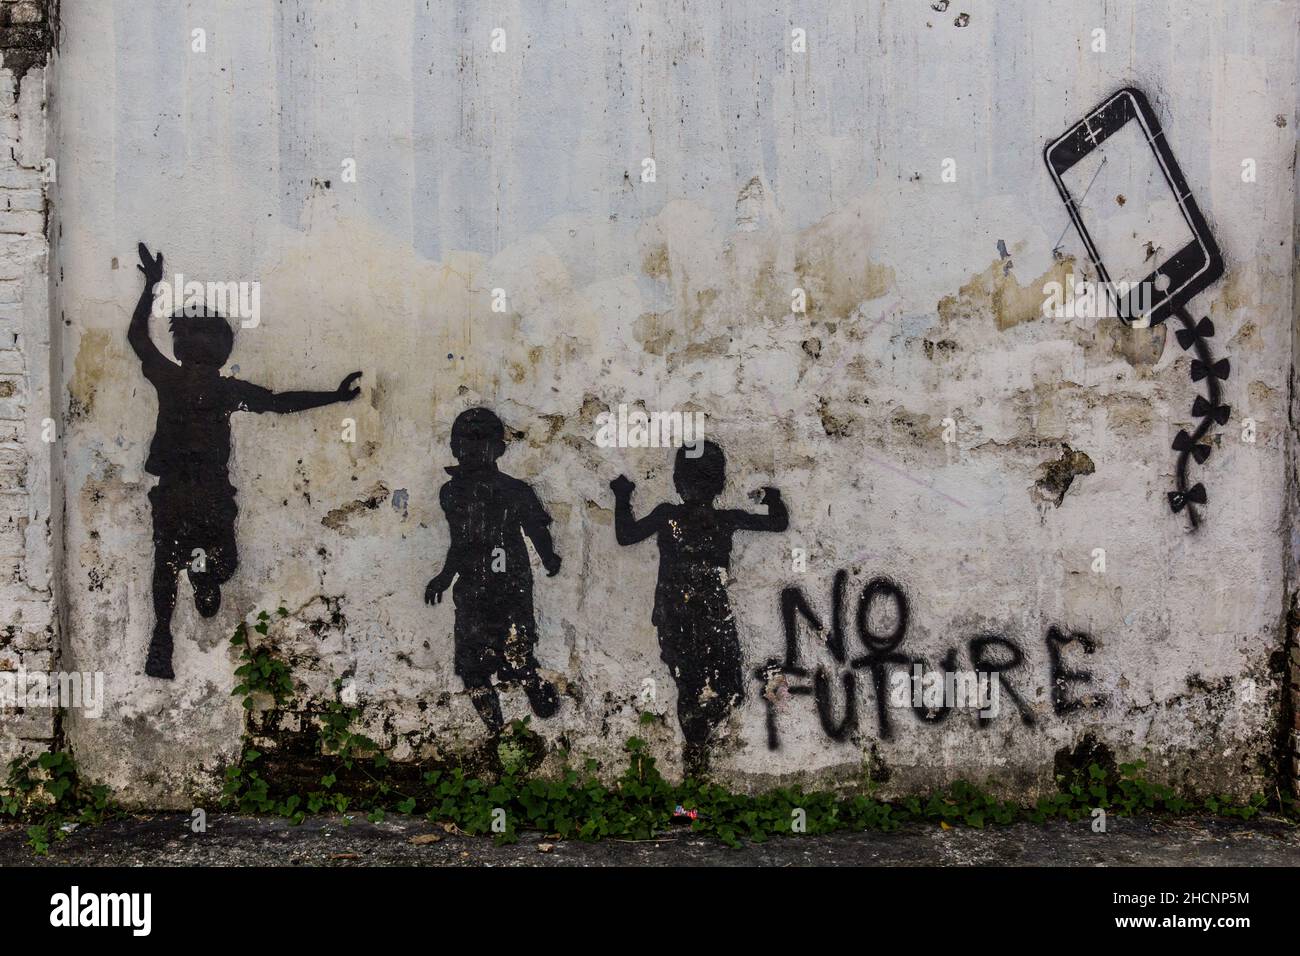 IPOH, MALAYASIA - MARCH 25, 2018: No future street art in Ipoh, Malaysia. Stock Photo